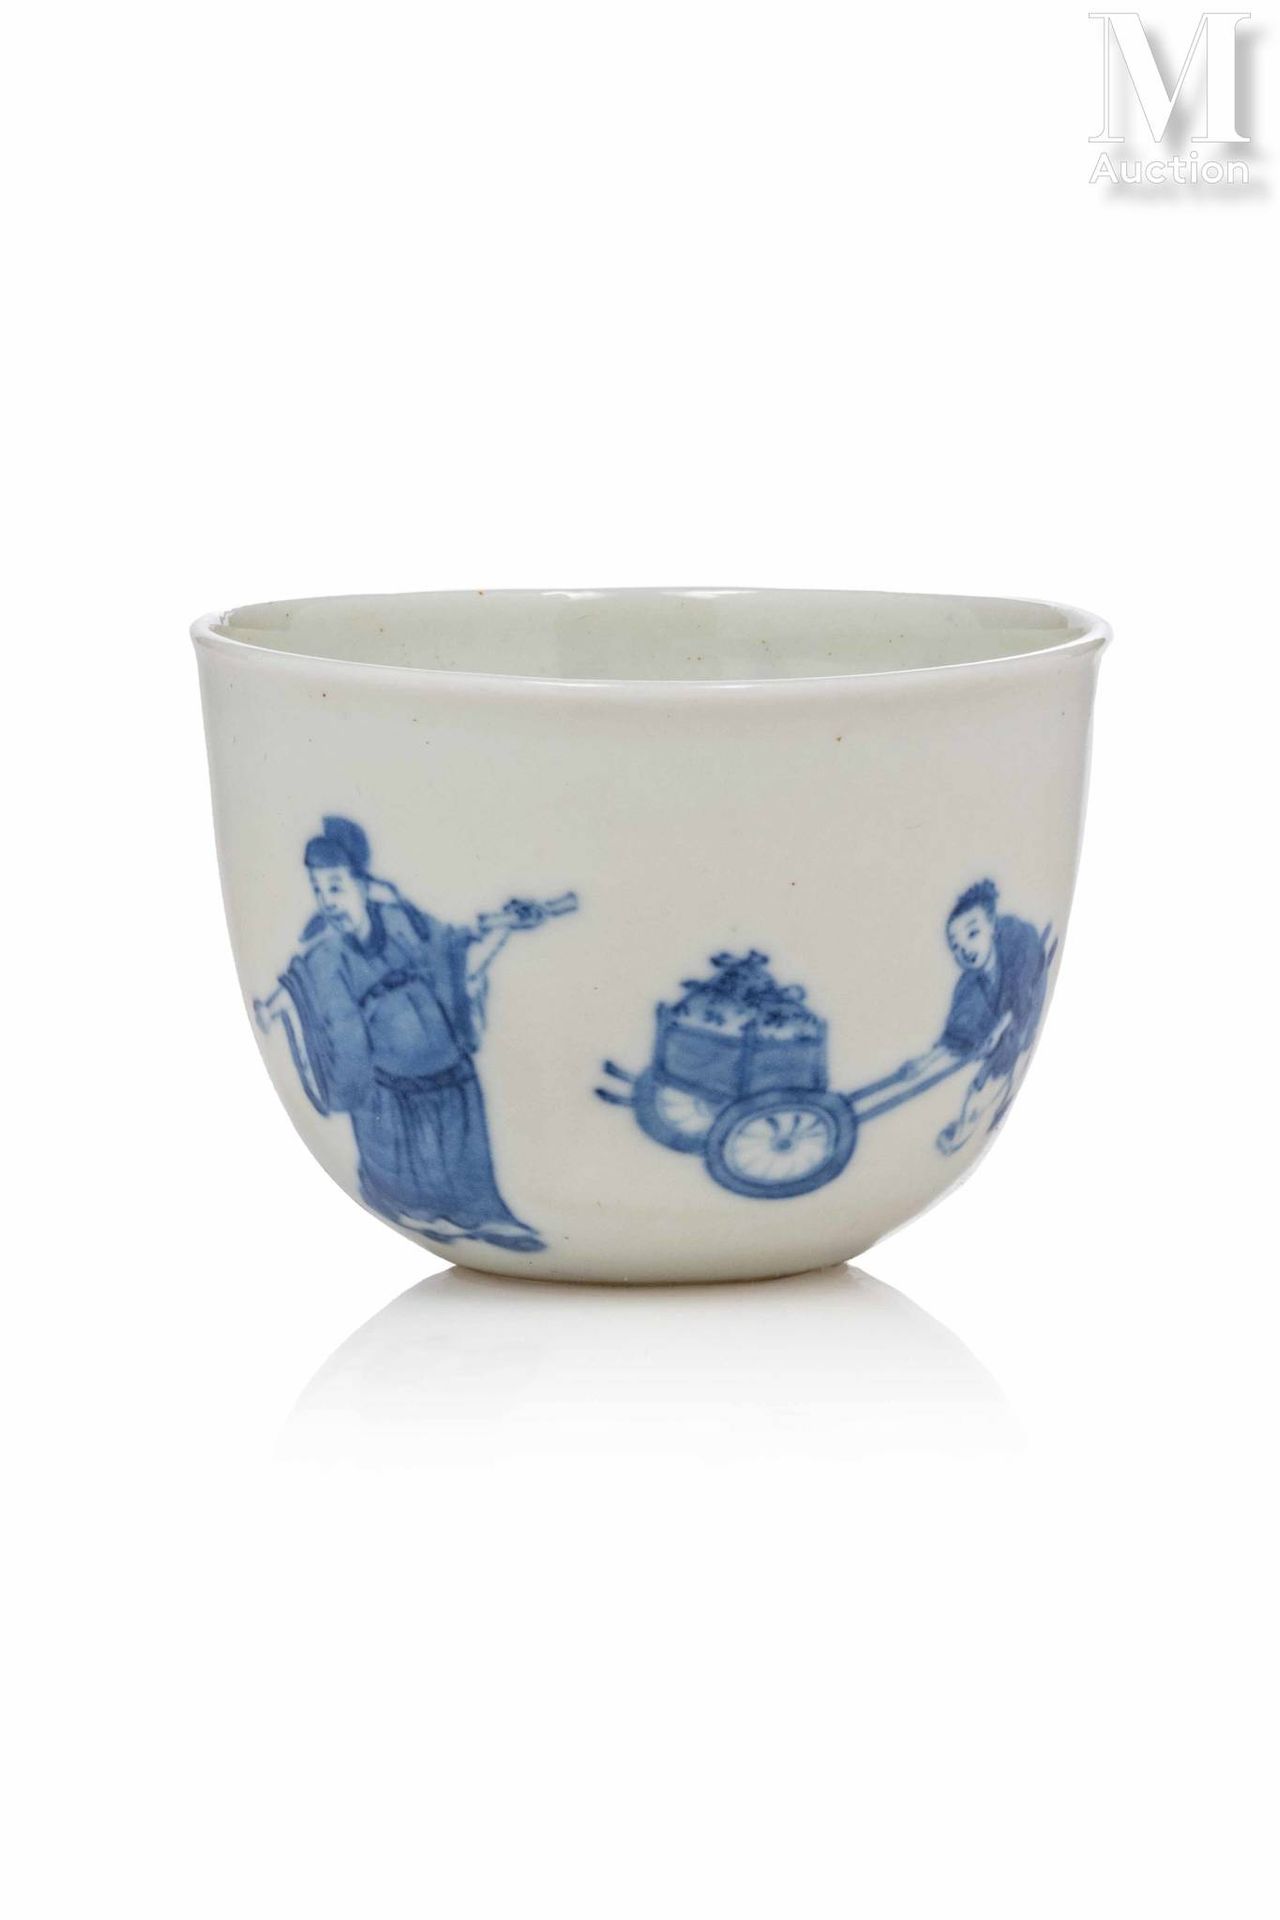 *CHINE, Epoque Kangxi, XVIIIe siècle Pequeño cuenco de porcelana azul y blanca

&hellip;